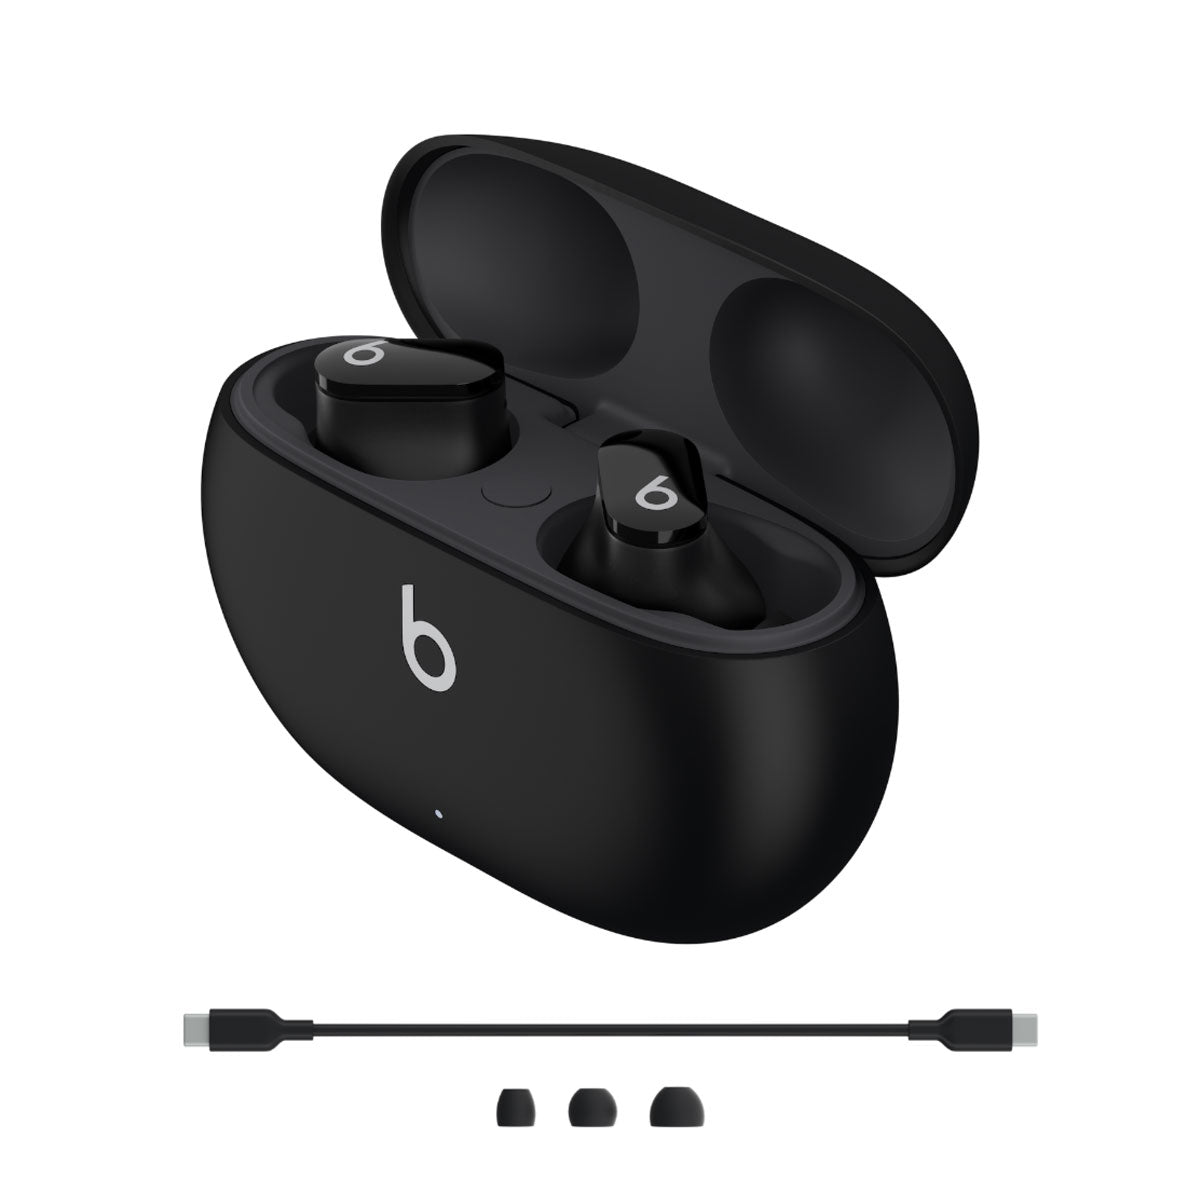 Beats Studio Buds True Wireless Noise Cancelling Earbuds - Black